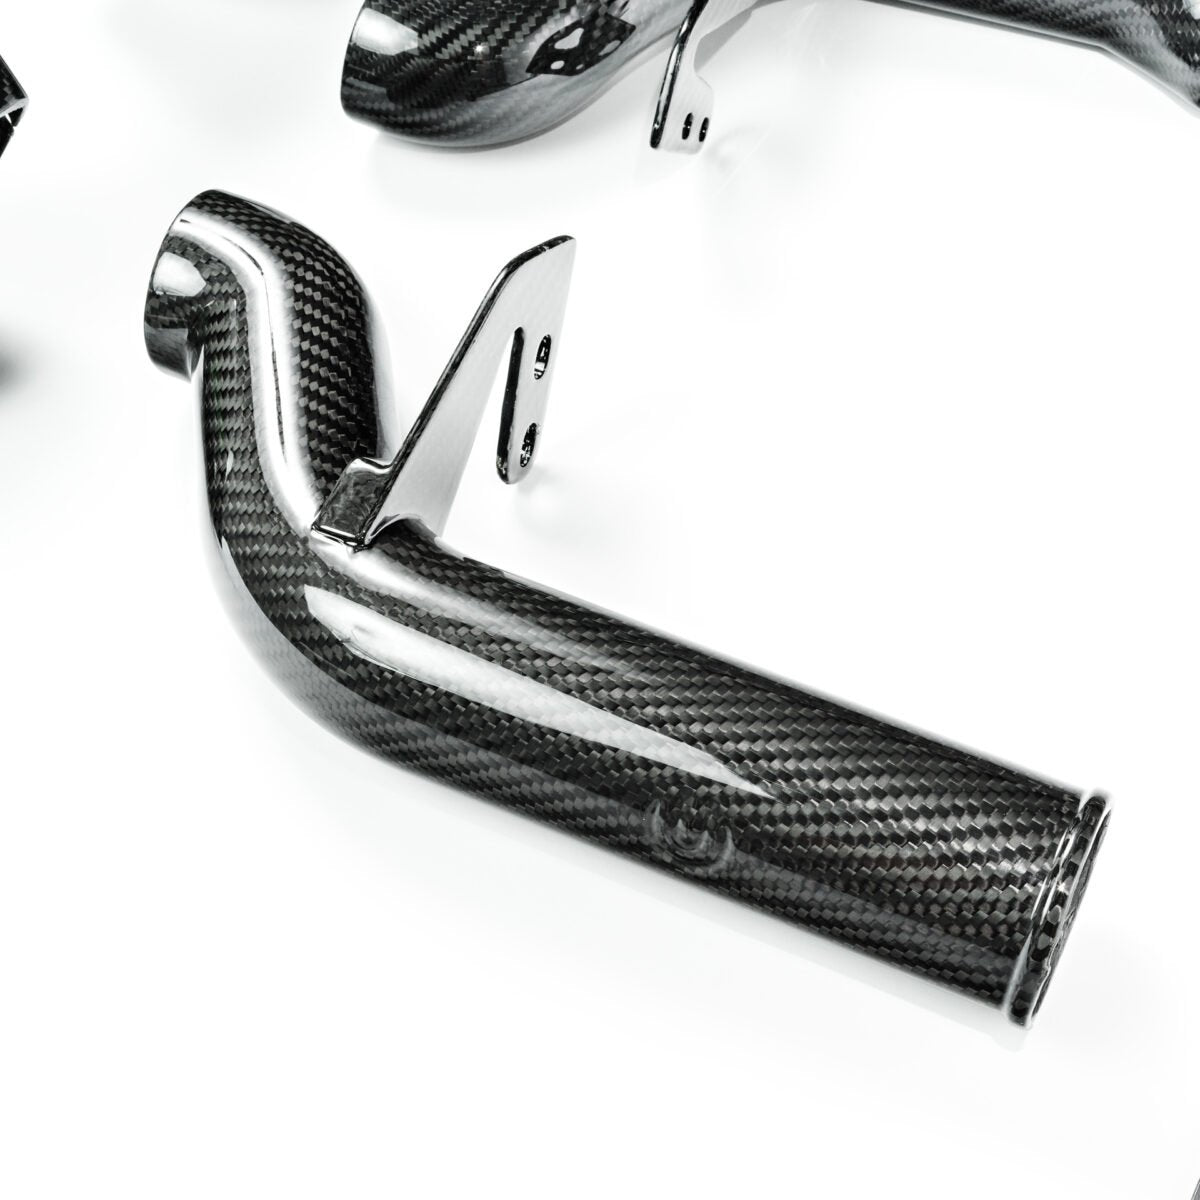 Unplugged Performance - Model S plaid Carbon Fiber Racing Brake Duct Kit (front) 2021+